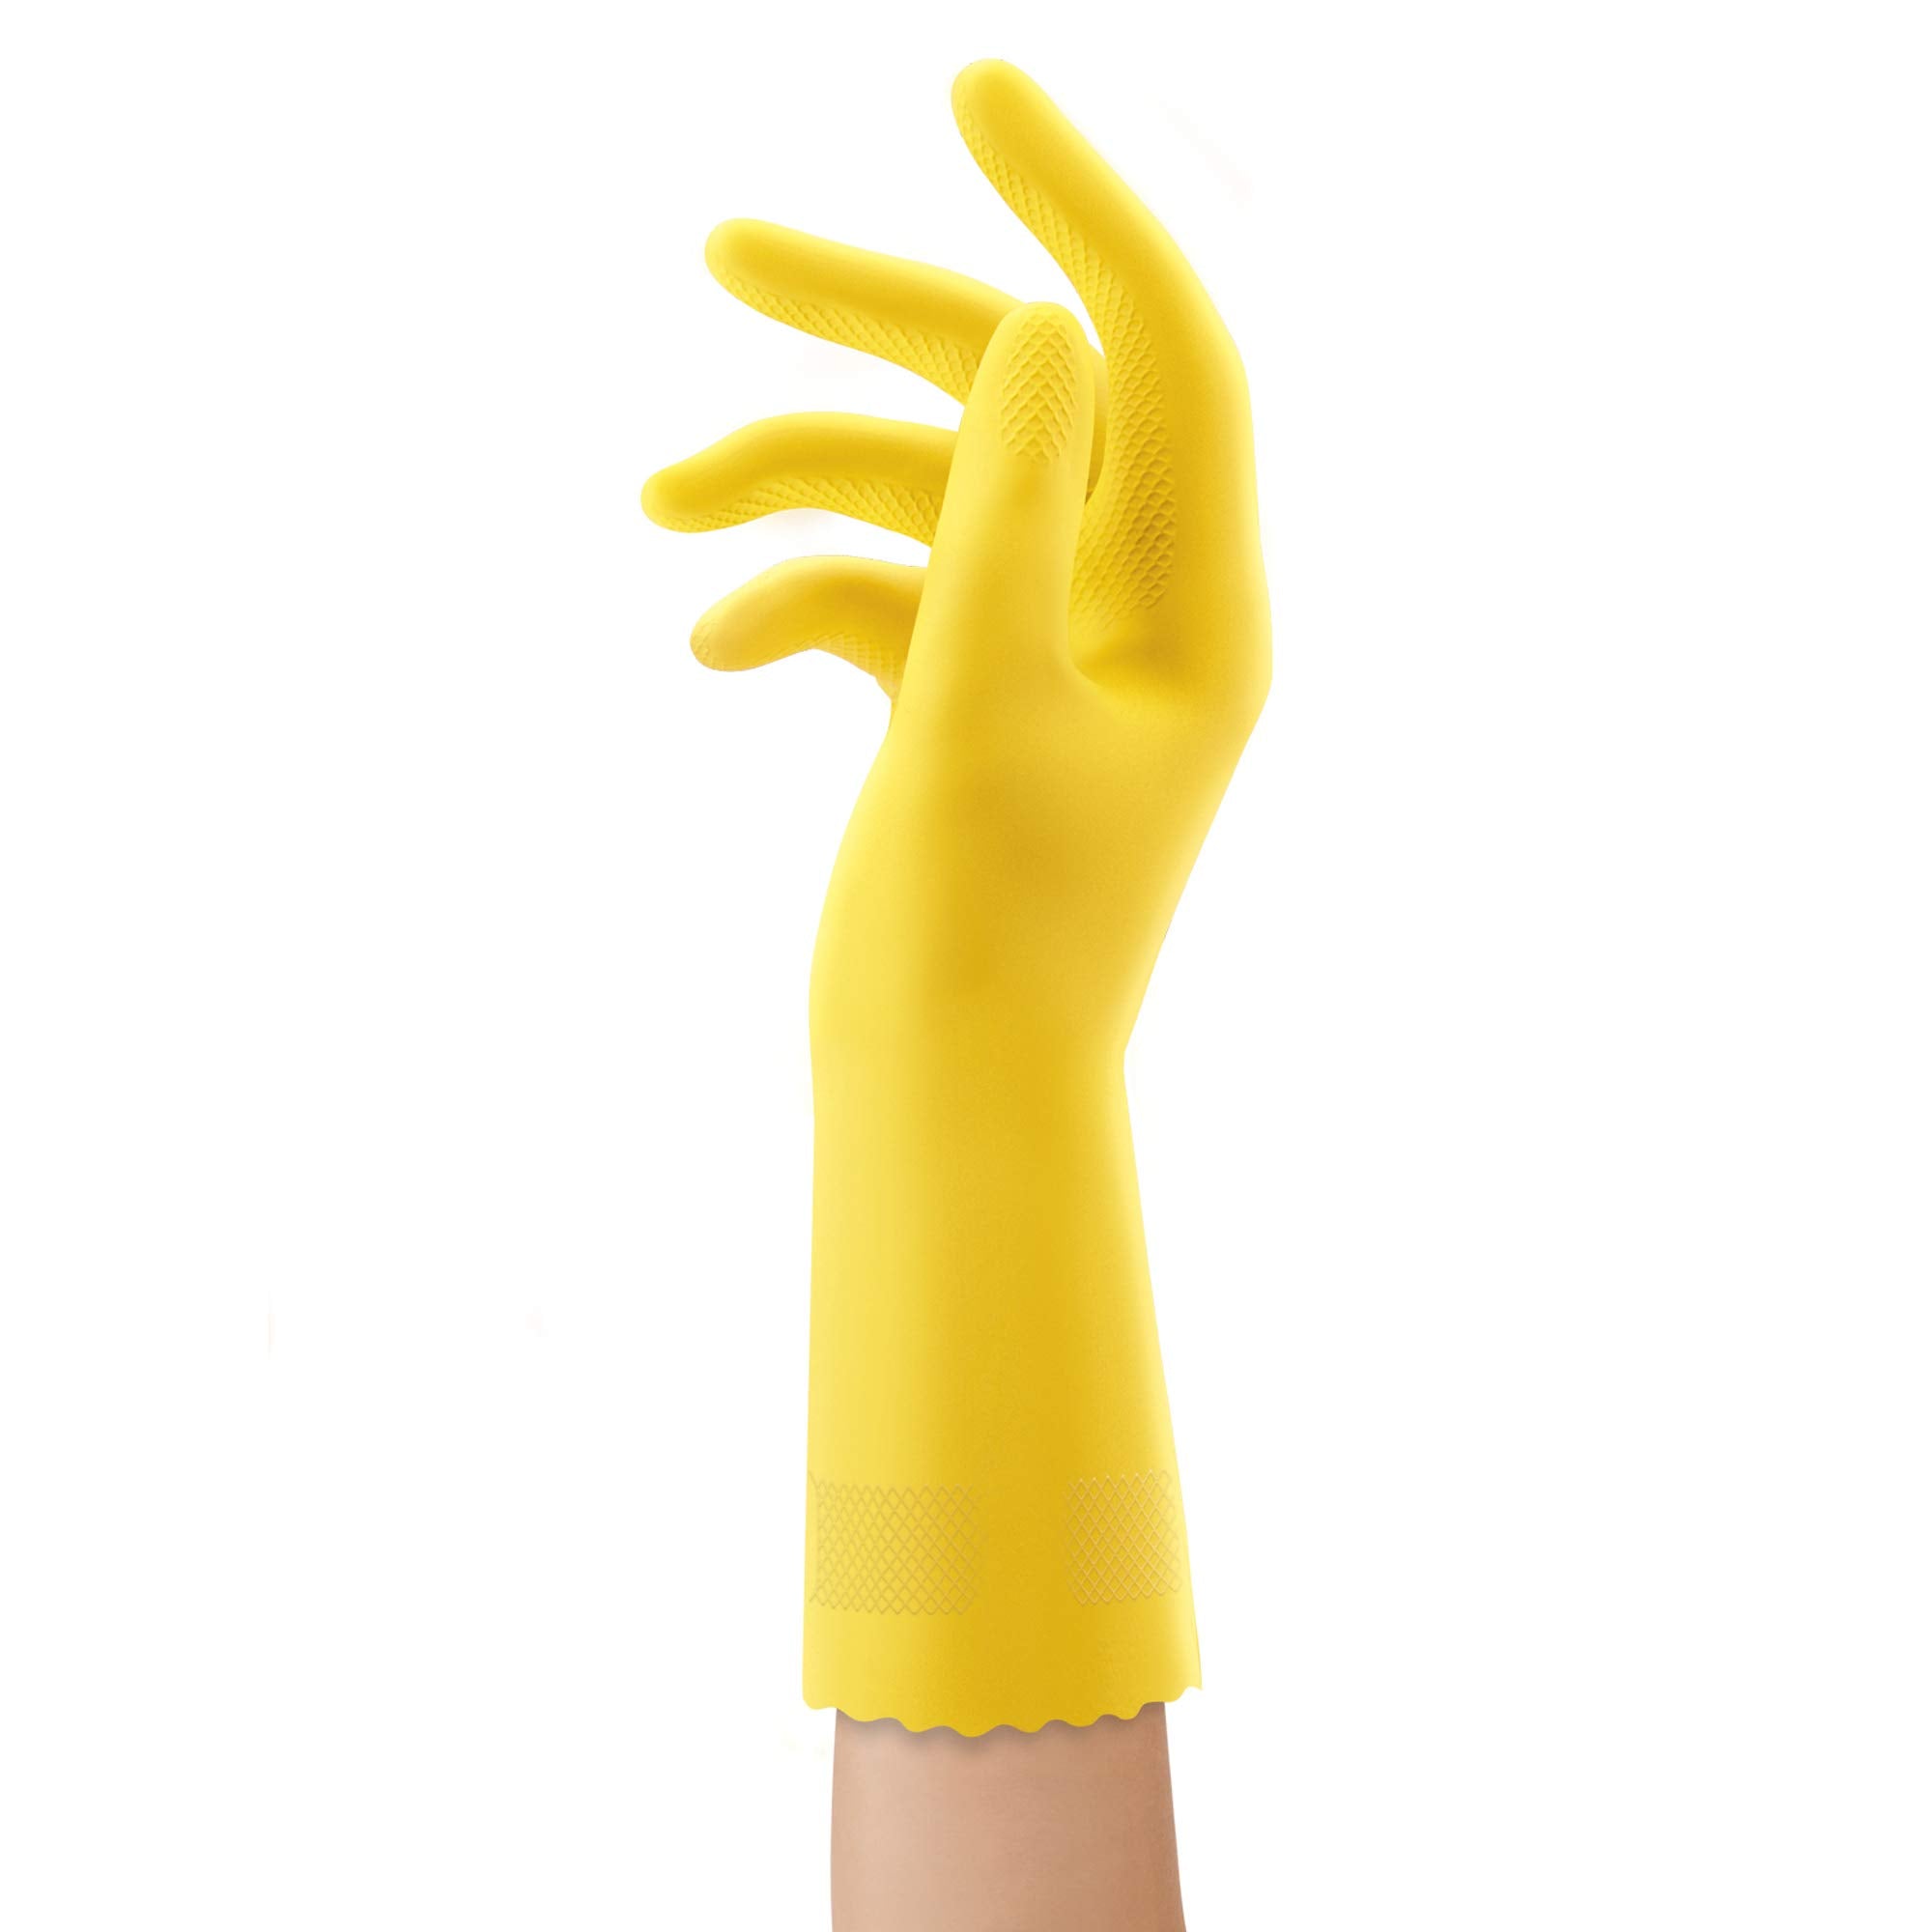 PLAYTEX HandSaver Reuseable Rubber Cleaning Gloves 6 Pairs